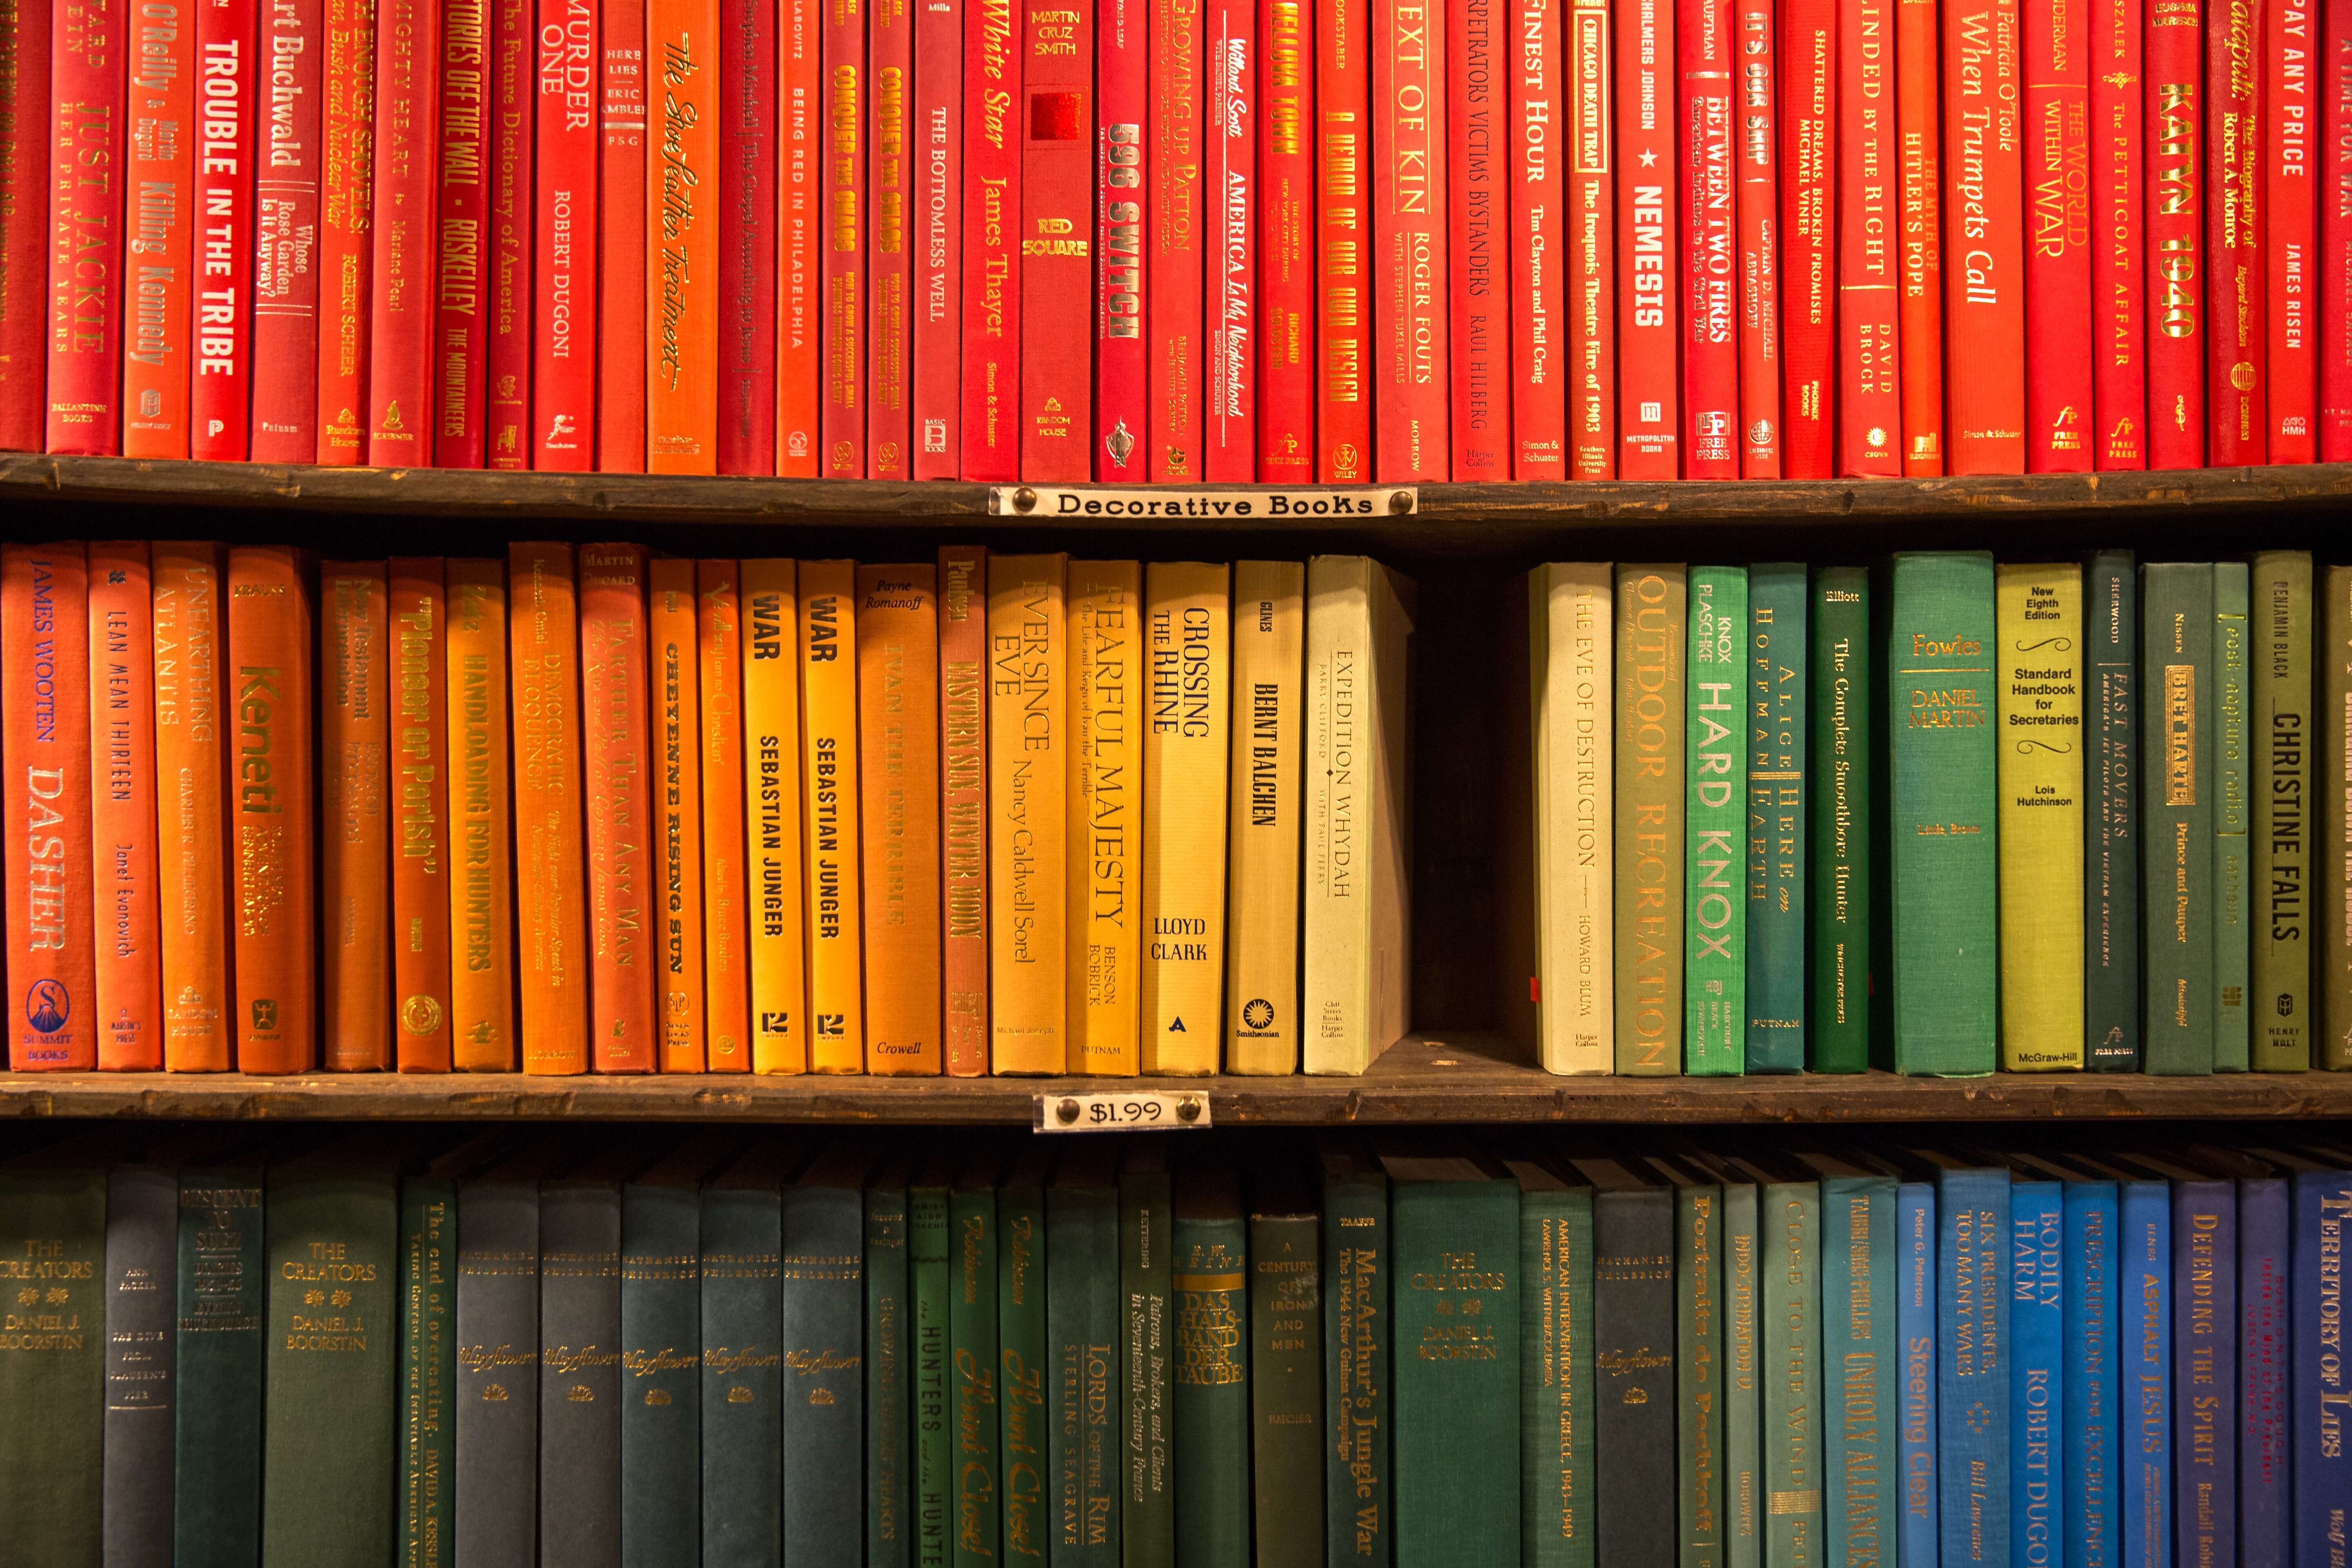 A bookshelf arranged by color